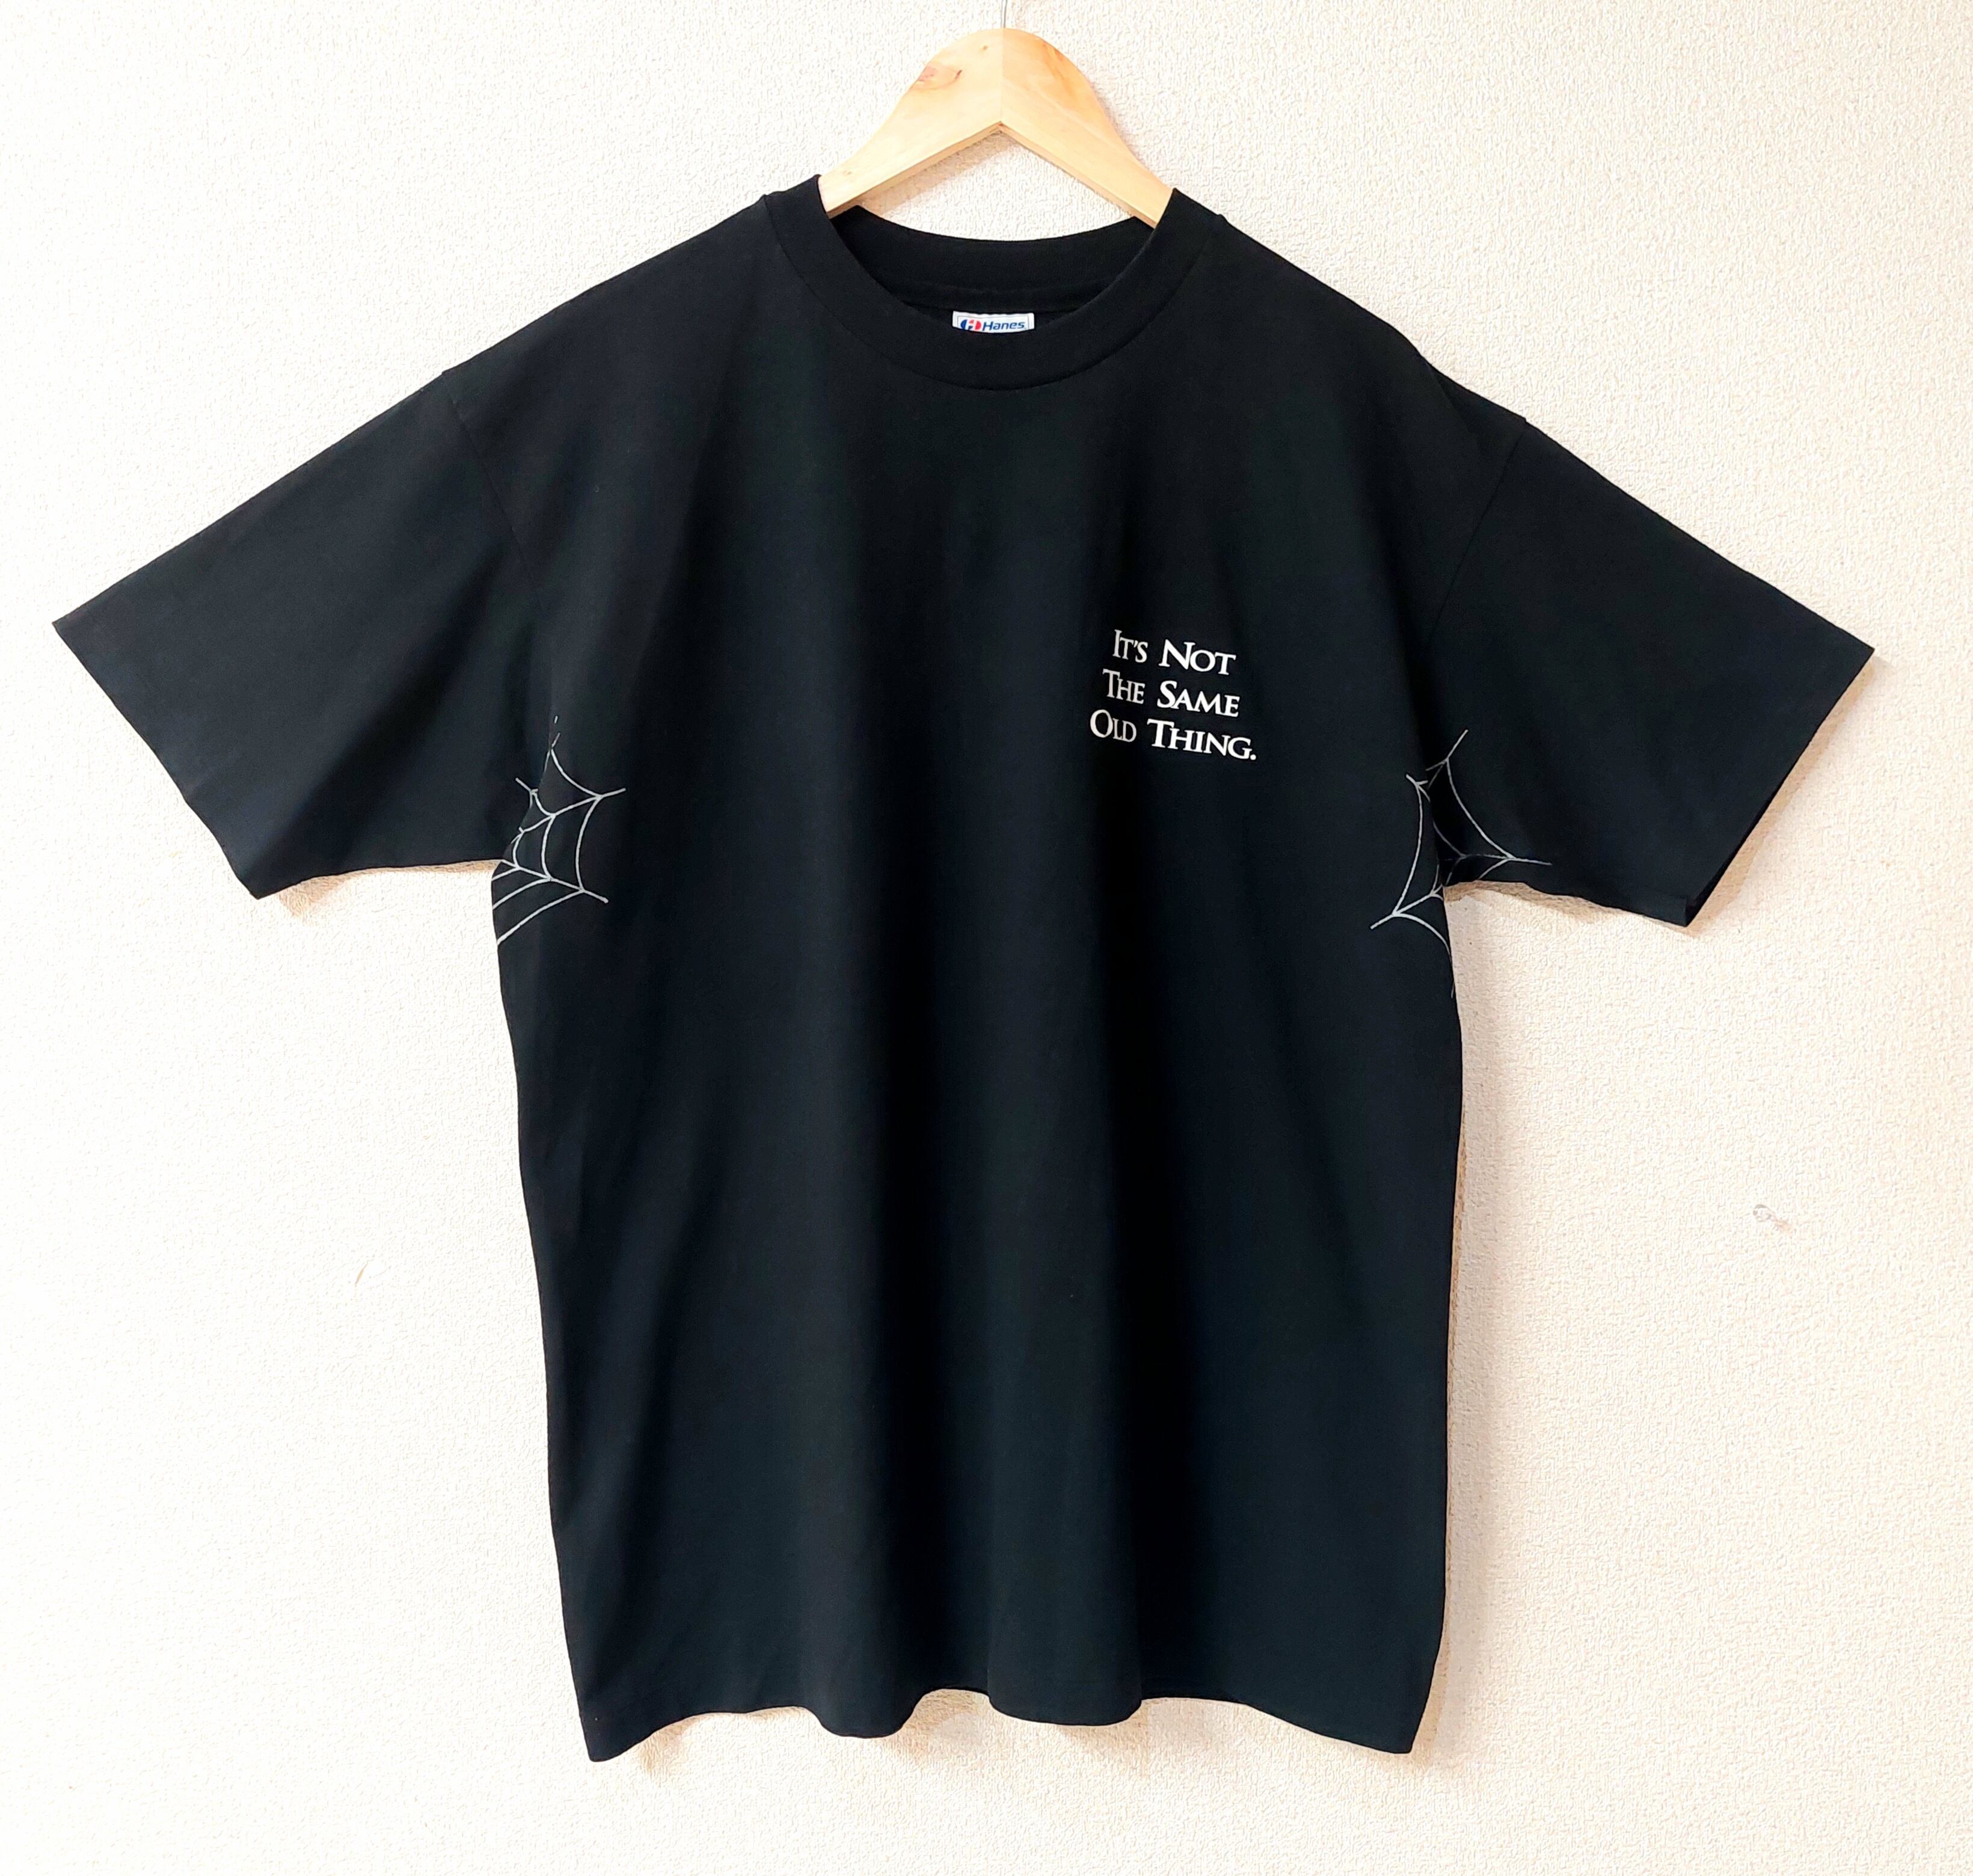 The Addams Family Tシャツ XL-